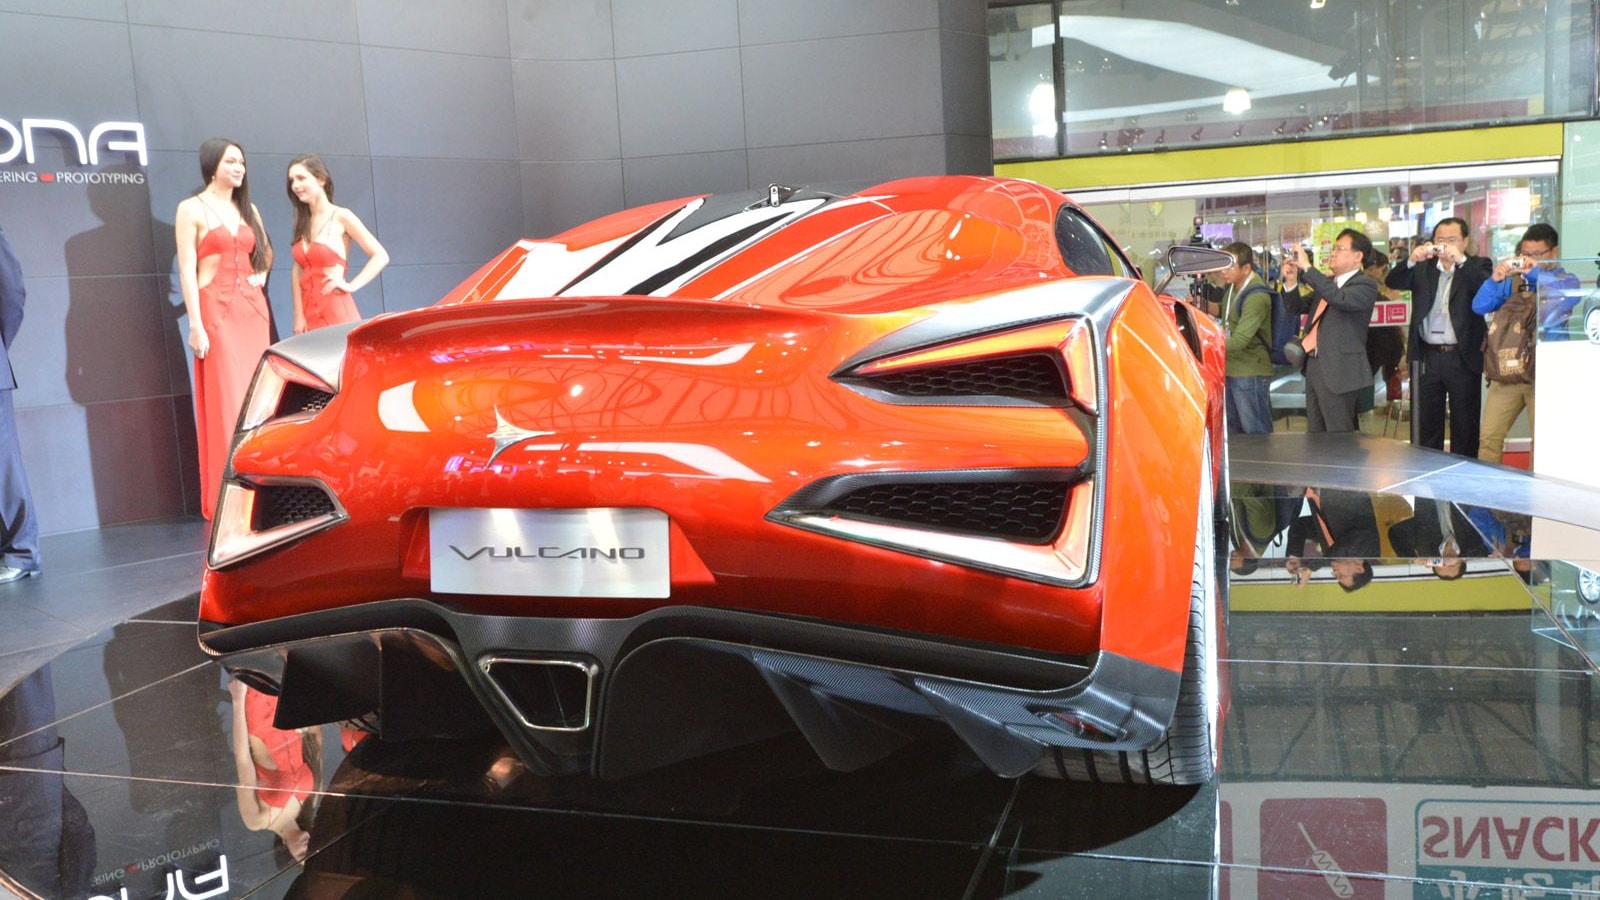 Icona Vulcano Supercar Concept Live Photos From Shanghai